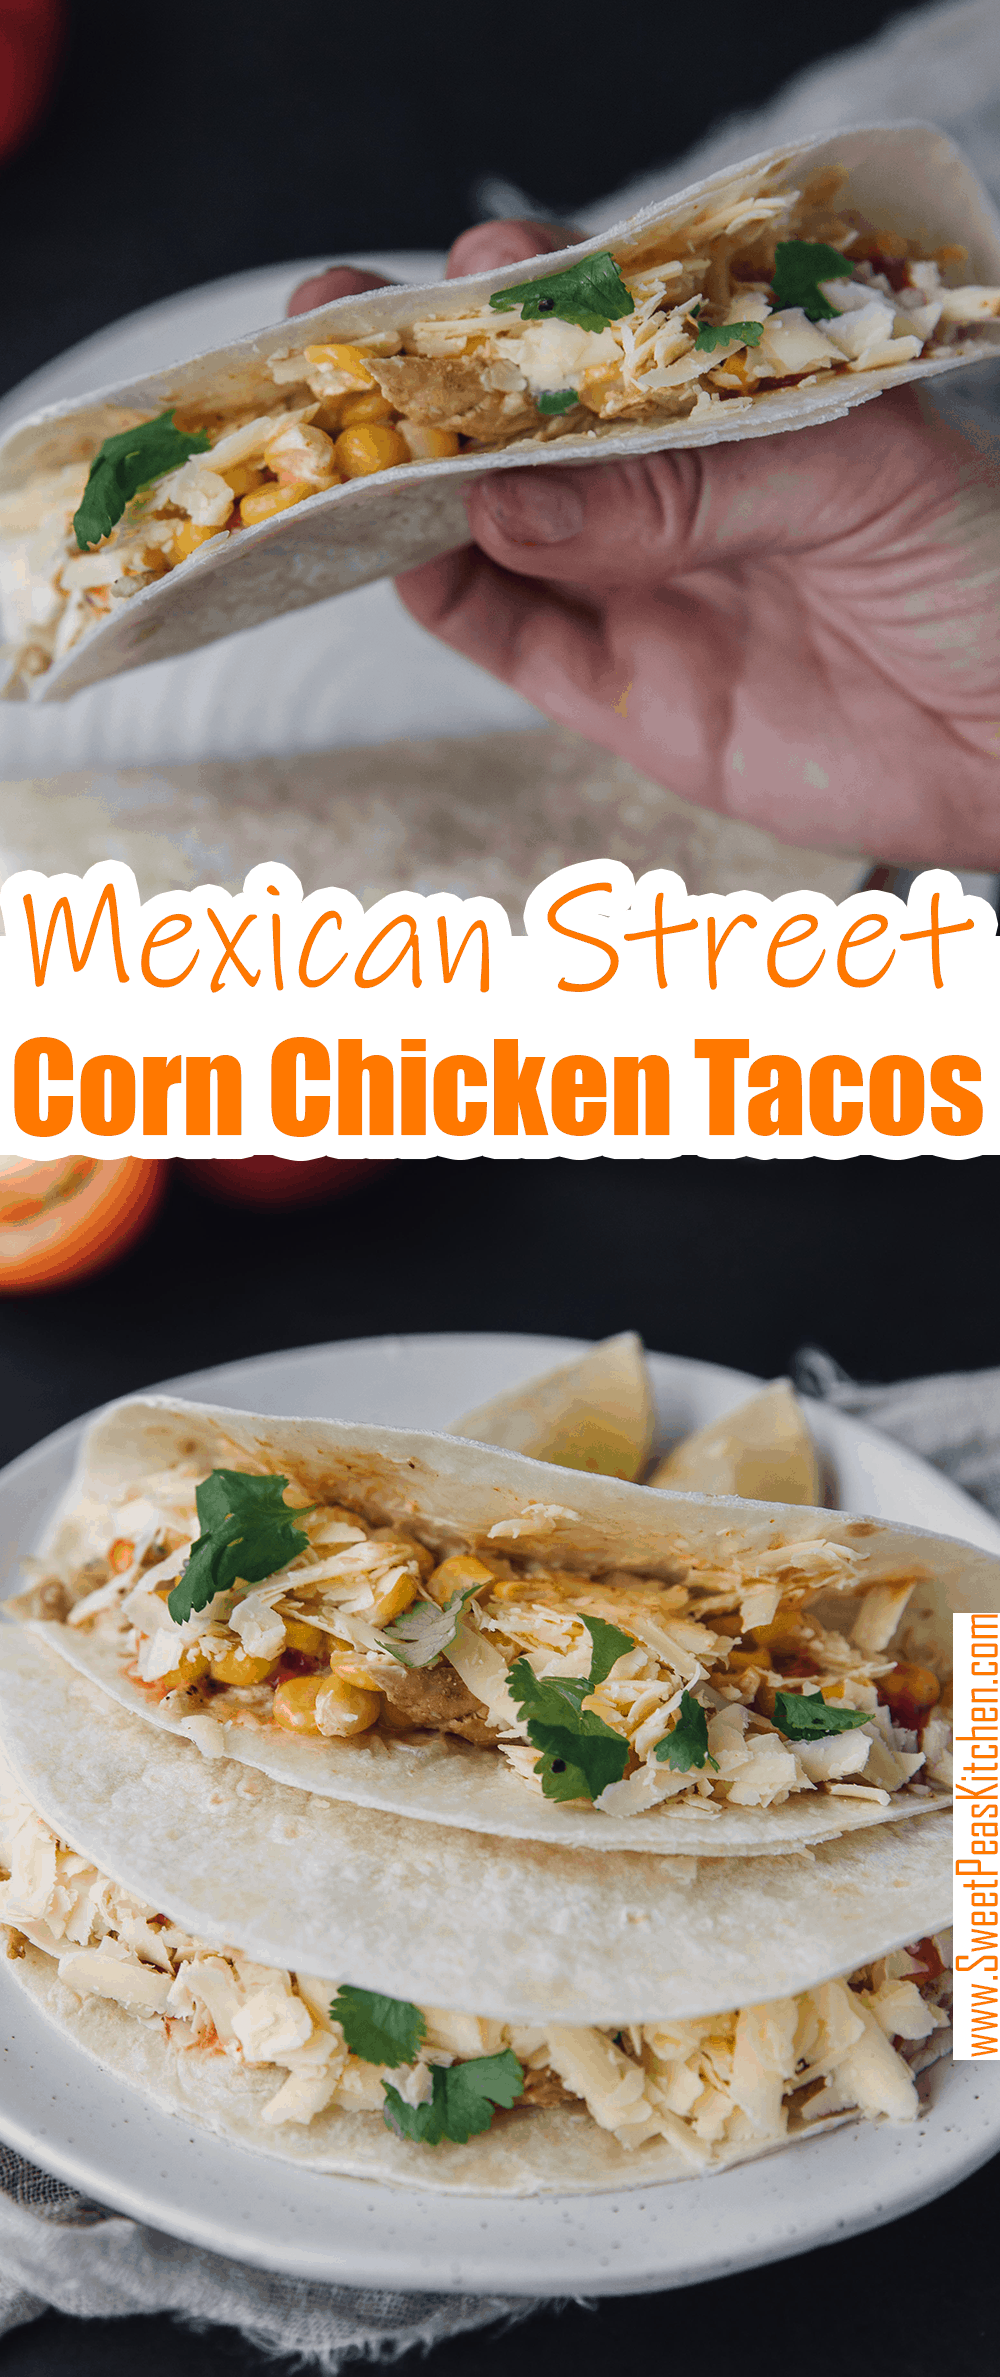 Mexican Street Corn Chicken Tacos